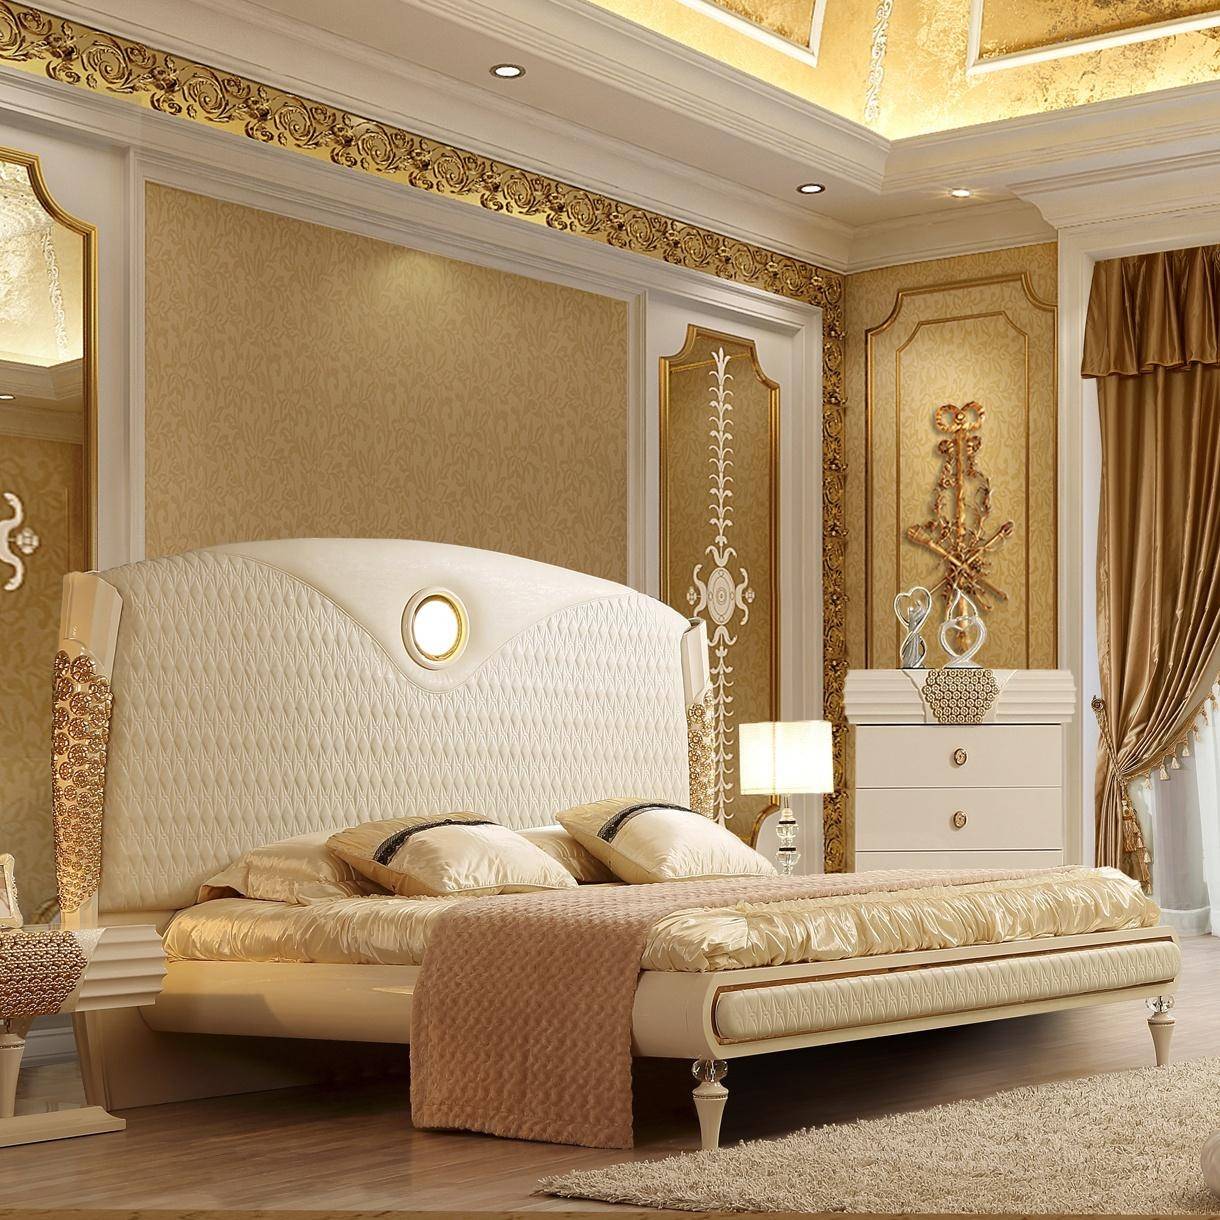 Homey Design Hd 901 California King, Modern California King Bed